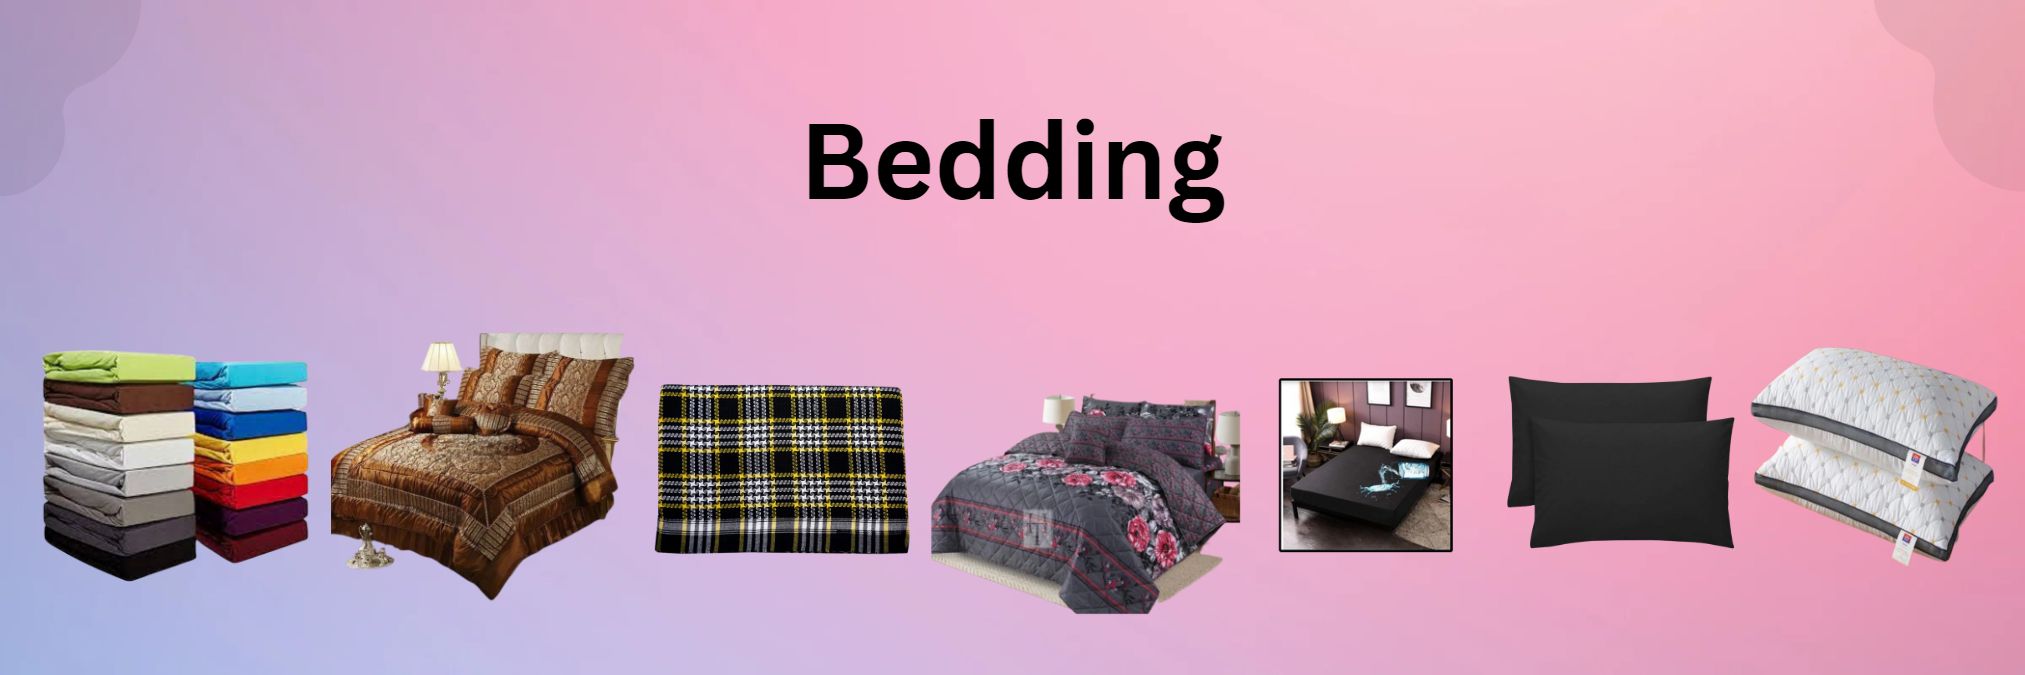 Bedding 